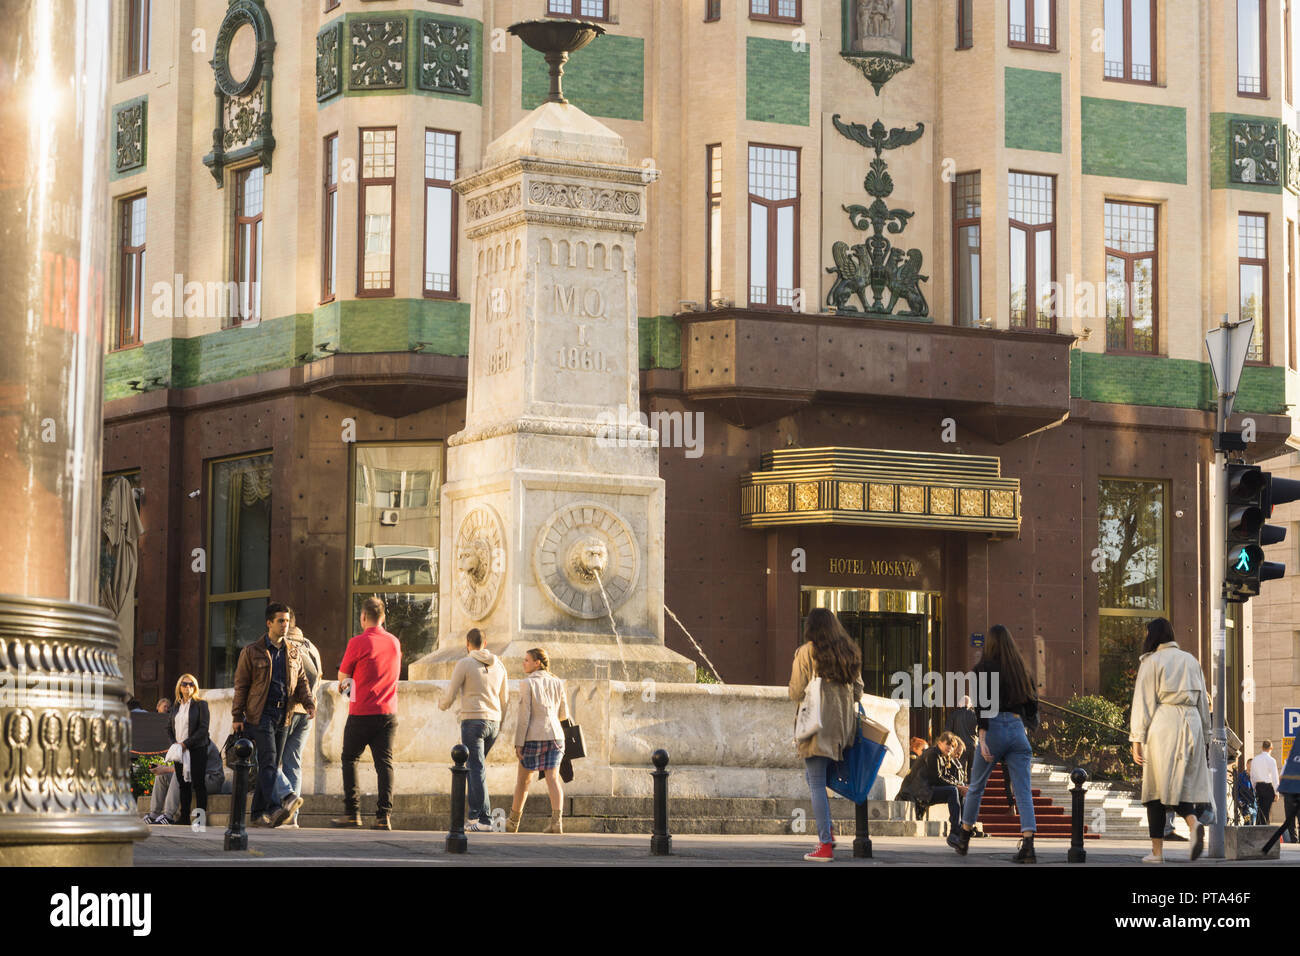 Terazije square in Belgrade with the Hotel Moskva in the background. Serbia. Stock Photo